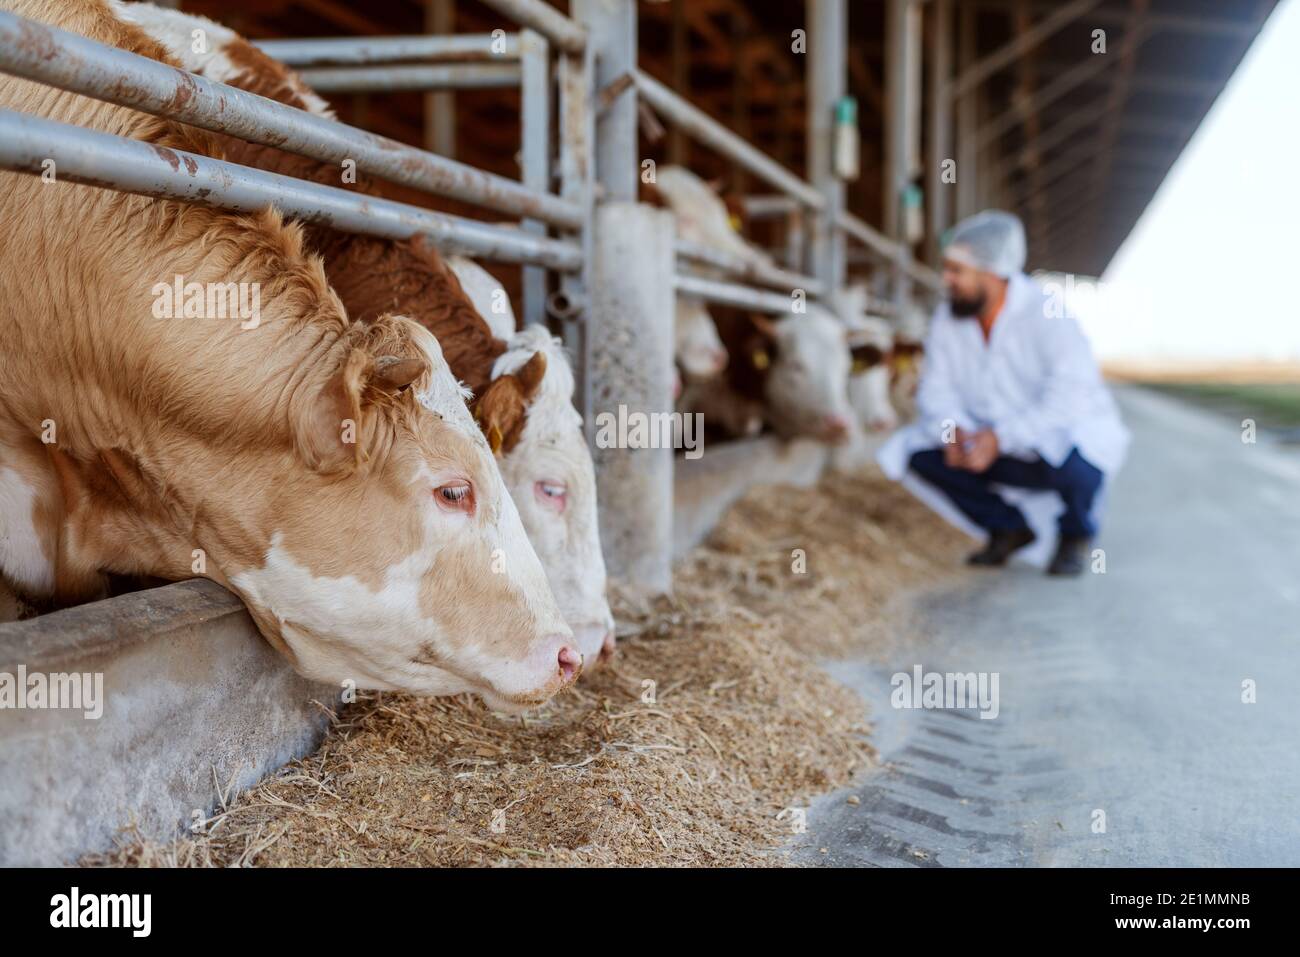 Veterinarian checking cows at cow farm. Stock Photo